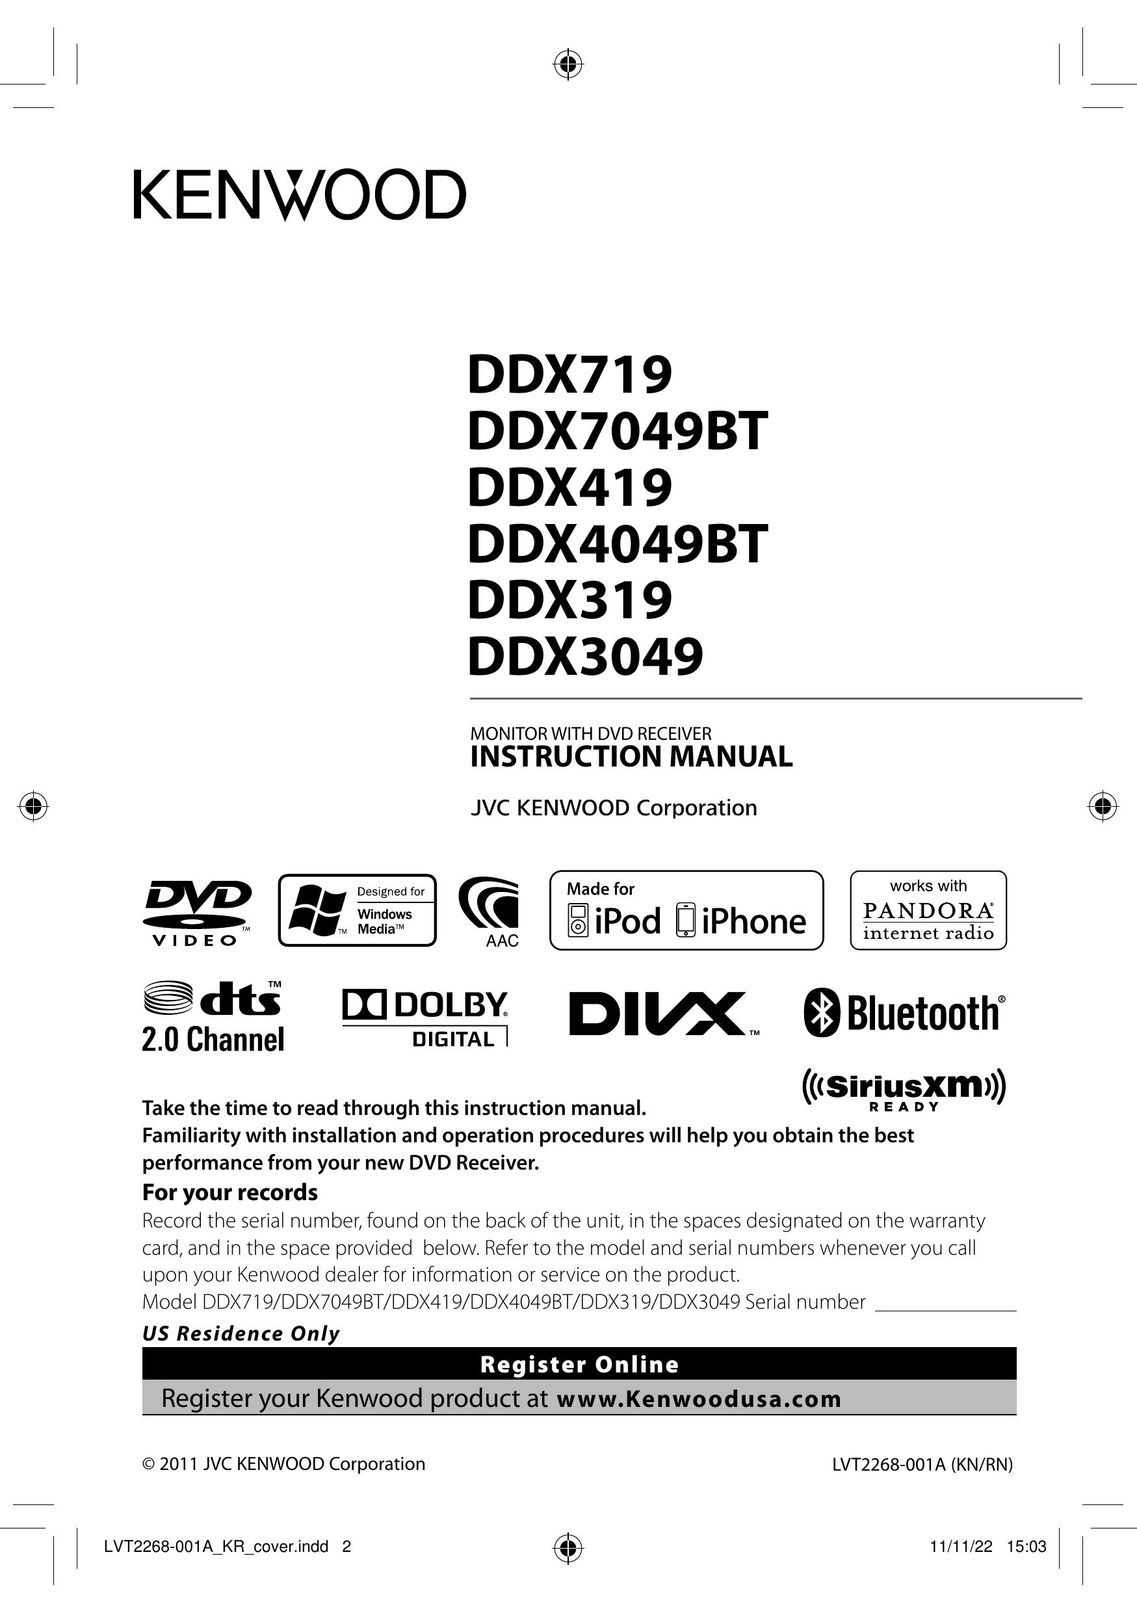 Kenwood DDX3049 Car Video System User Manual